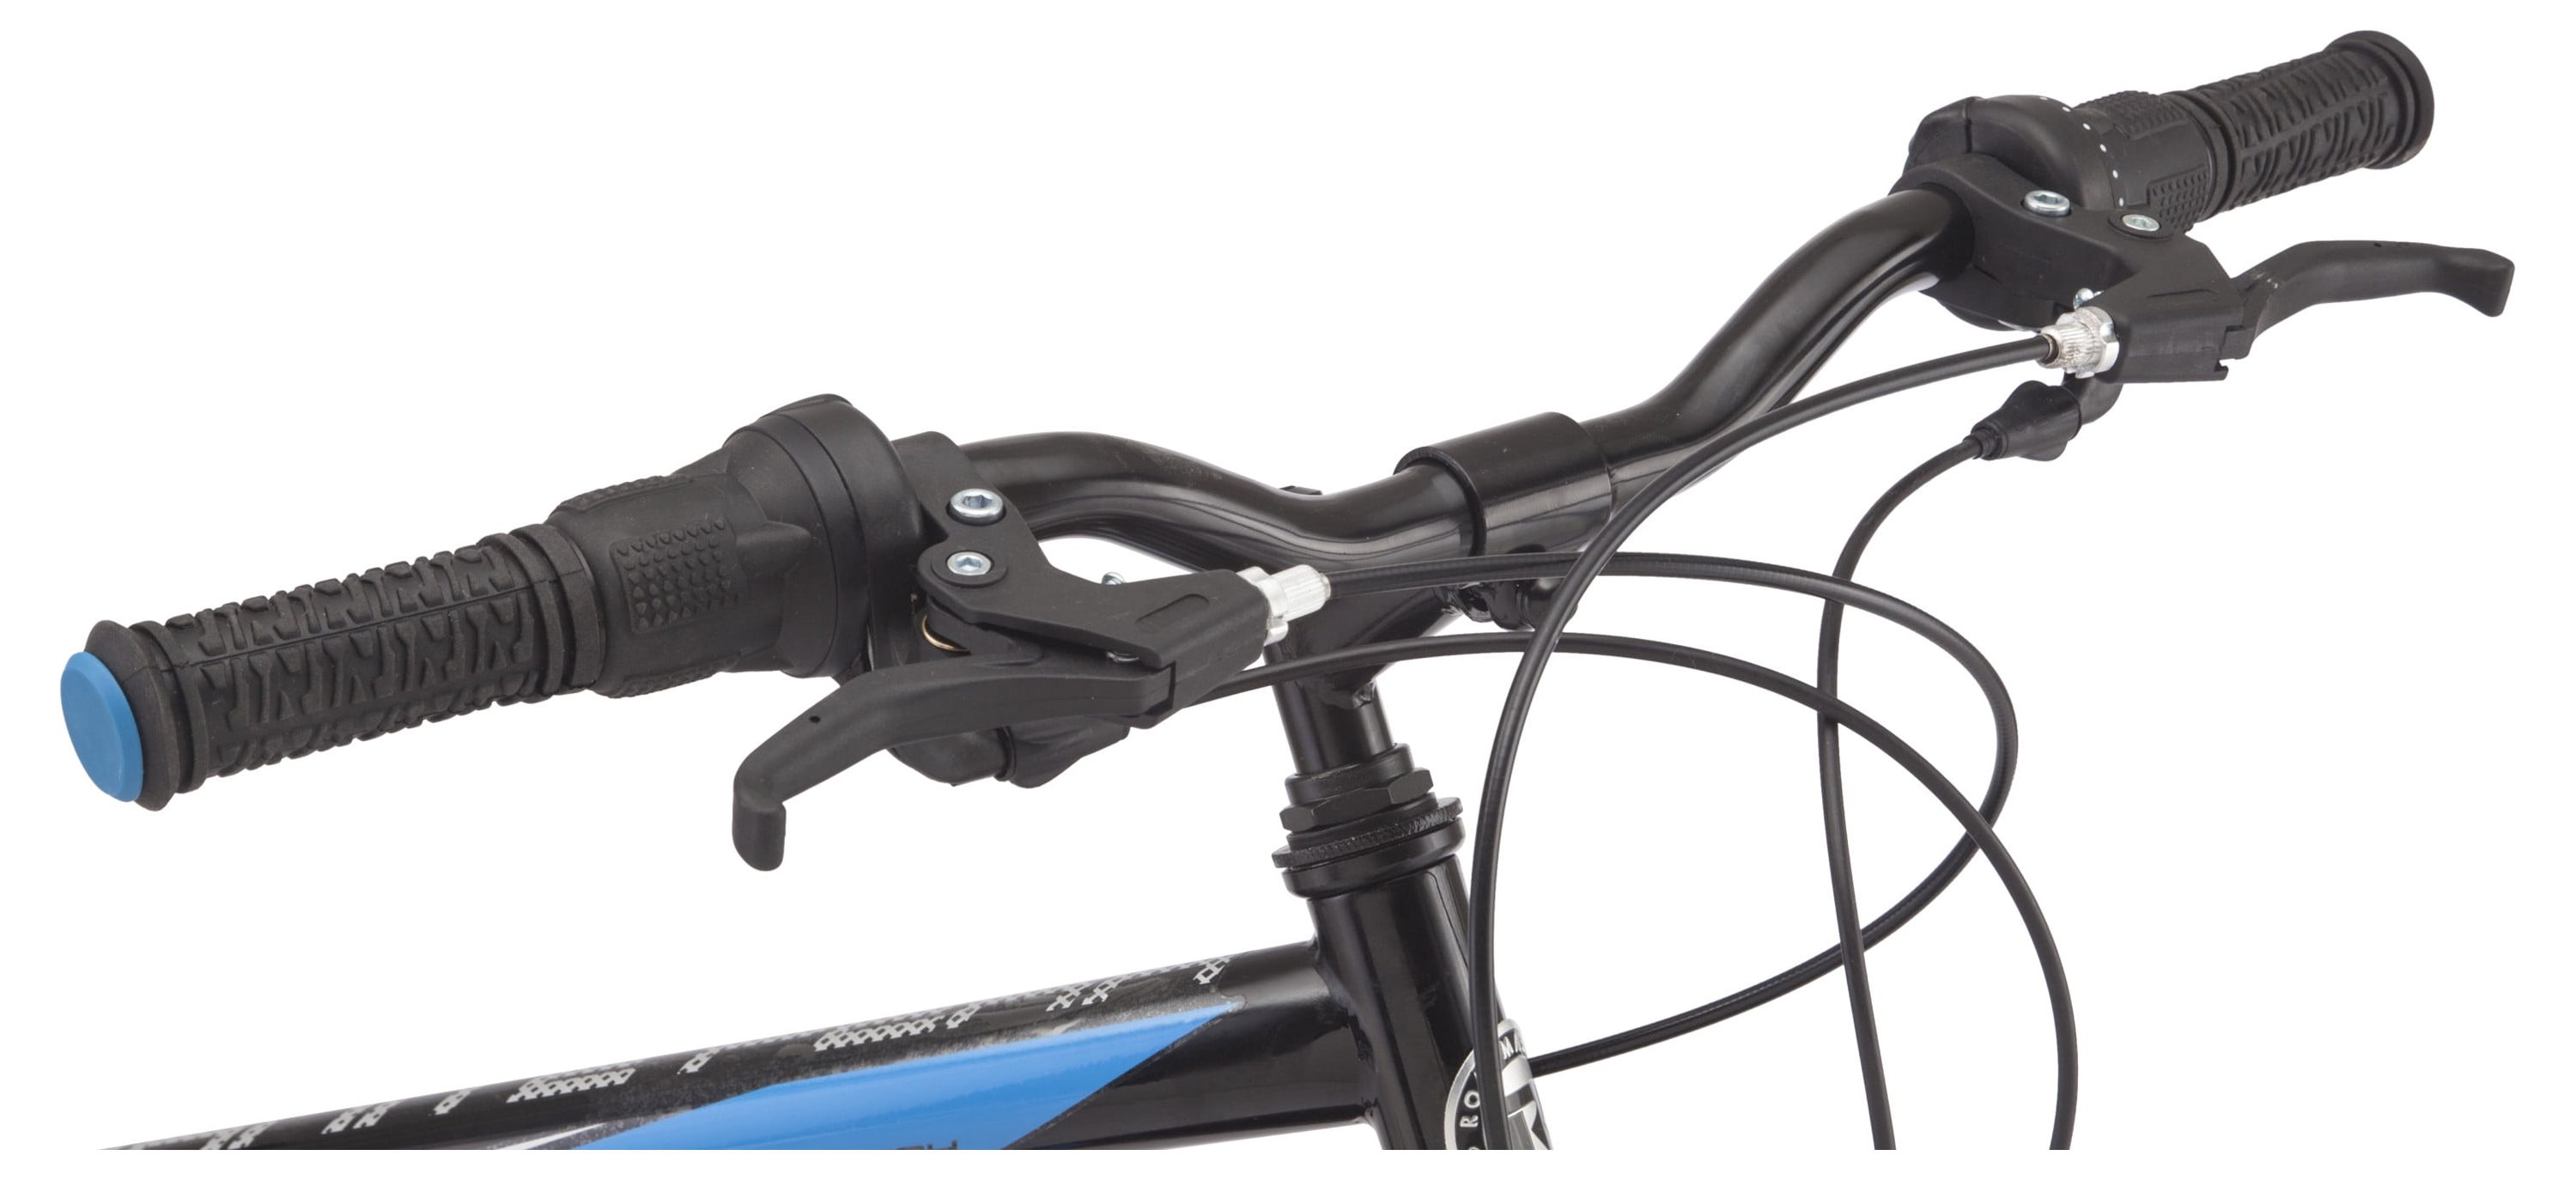 Roadmaster Granite Peak Men's Mountain Bike, 26" wheels, Black/Blue - image 4 of 5